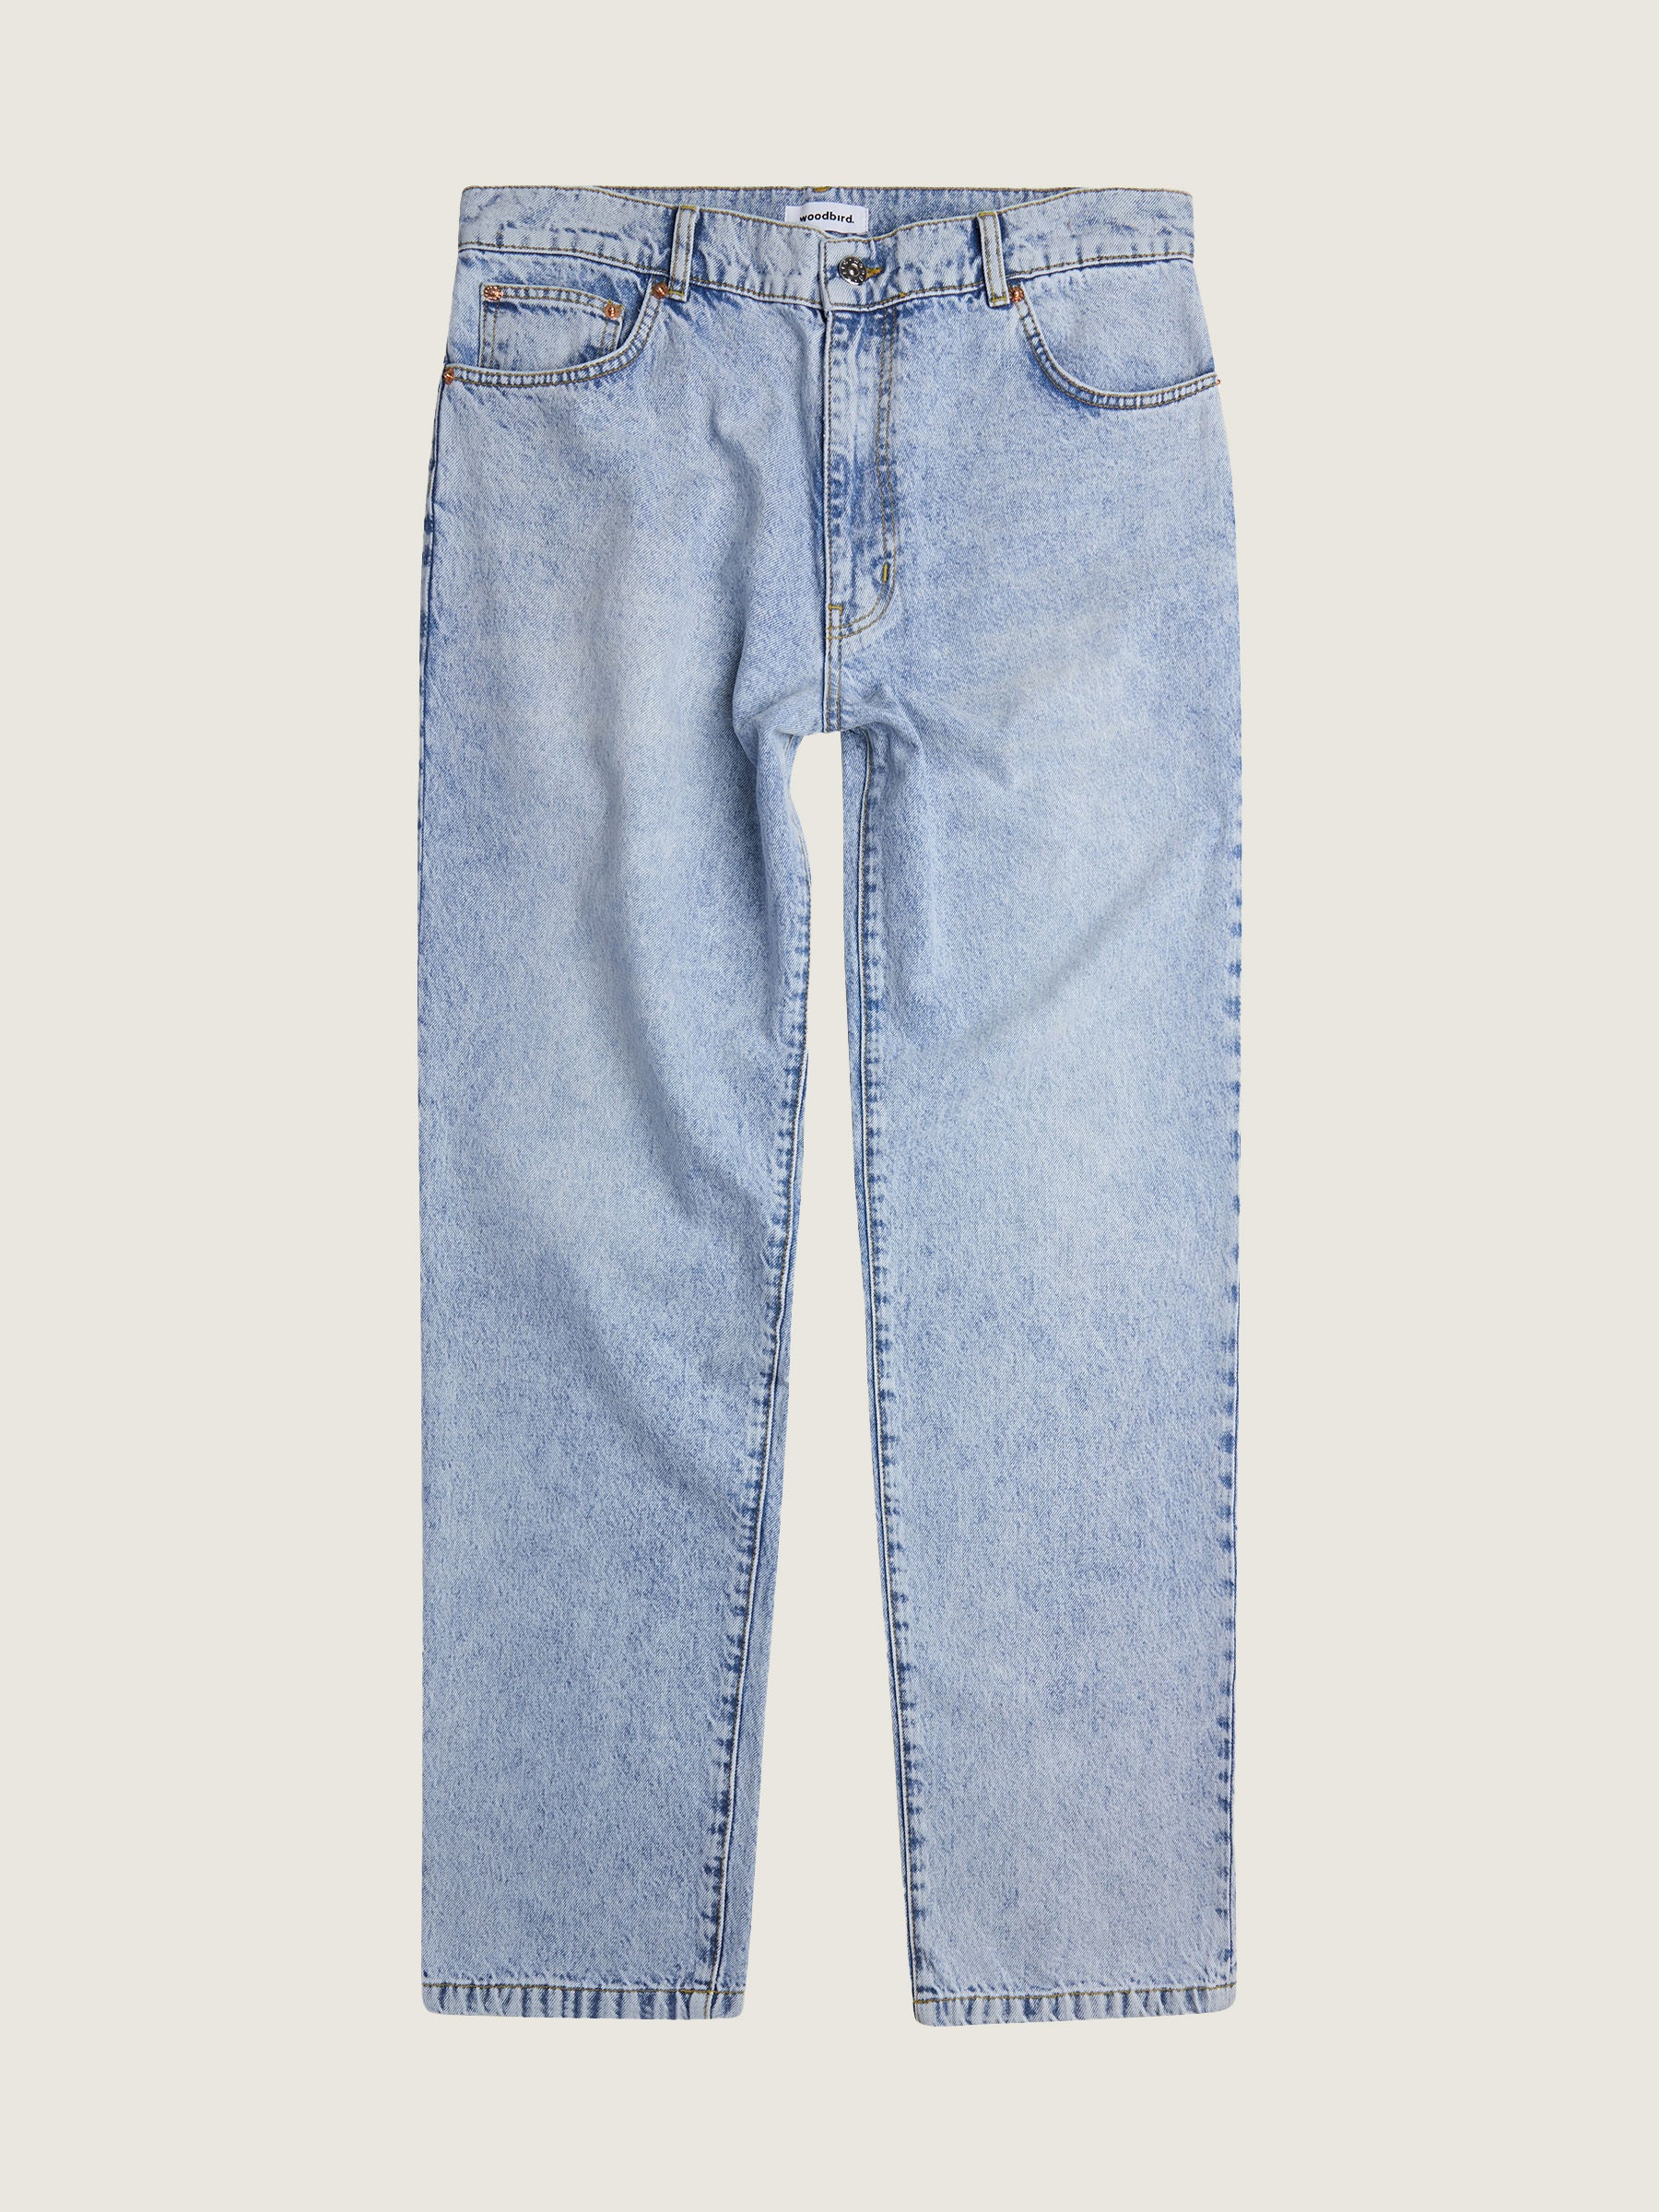 Woodbird Leroy Train Jeans Jeans Vintage Blue